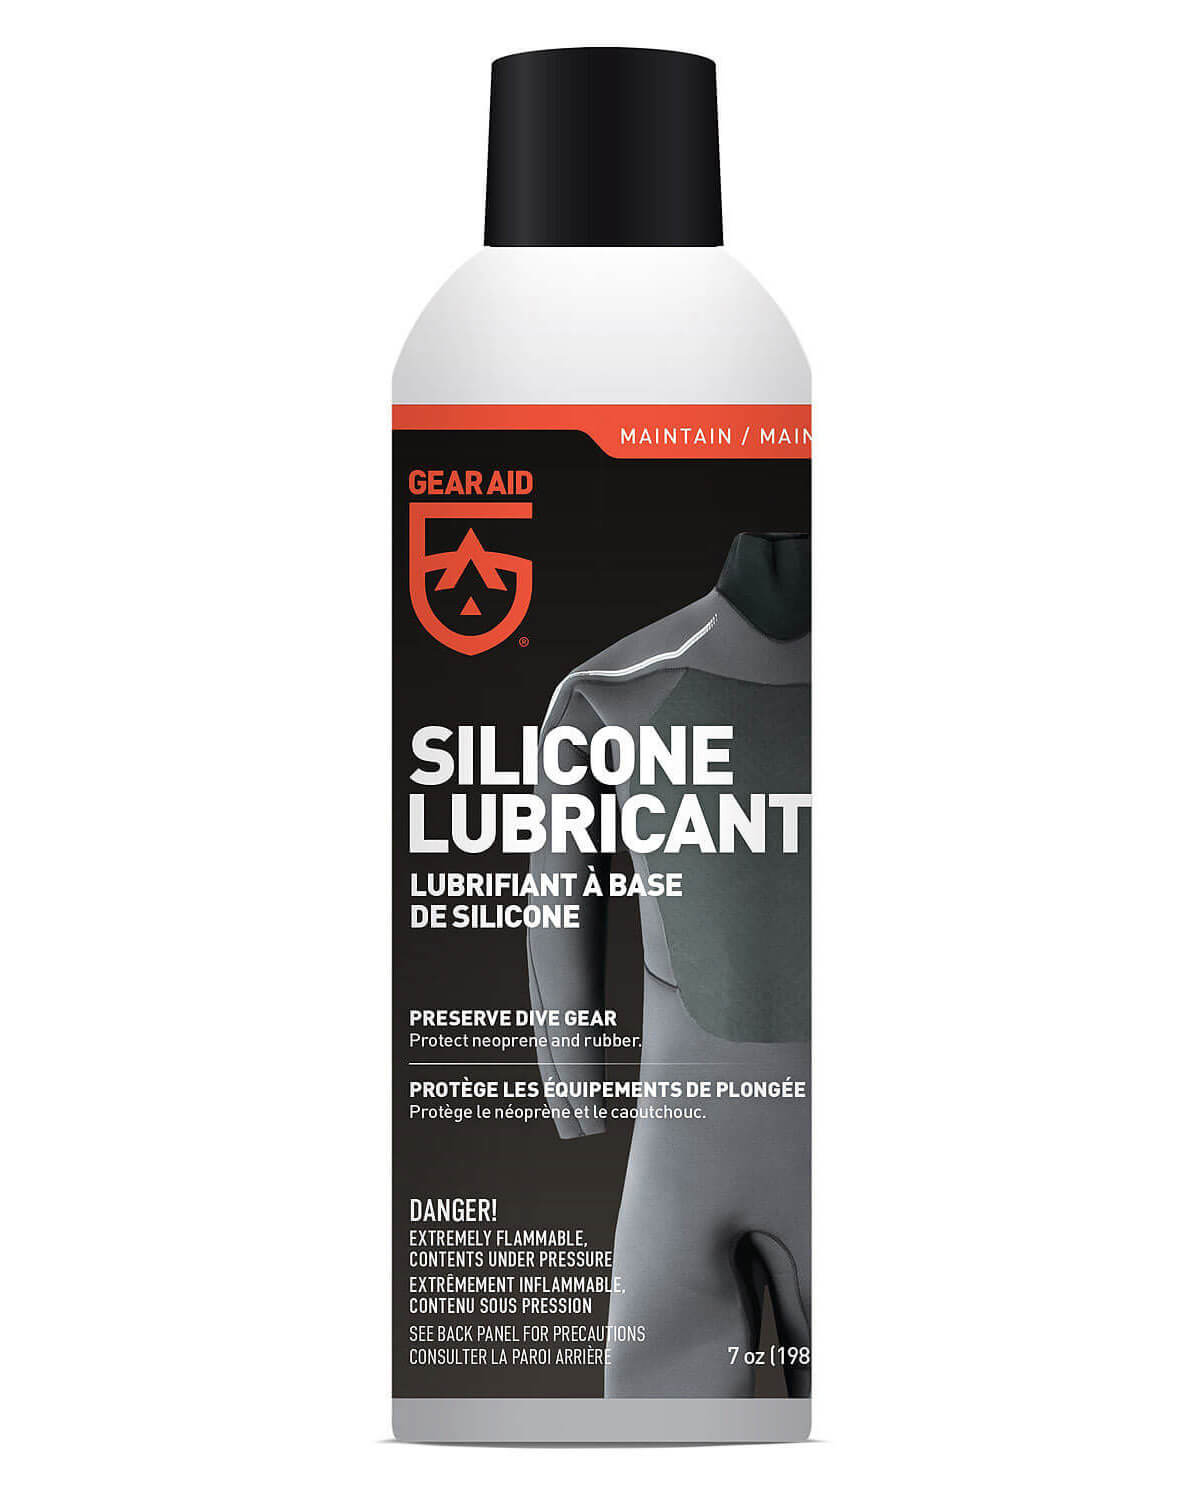 Silicone Spray Lubricant & Protectant - United SAR, Inc.